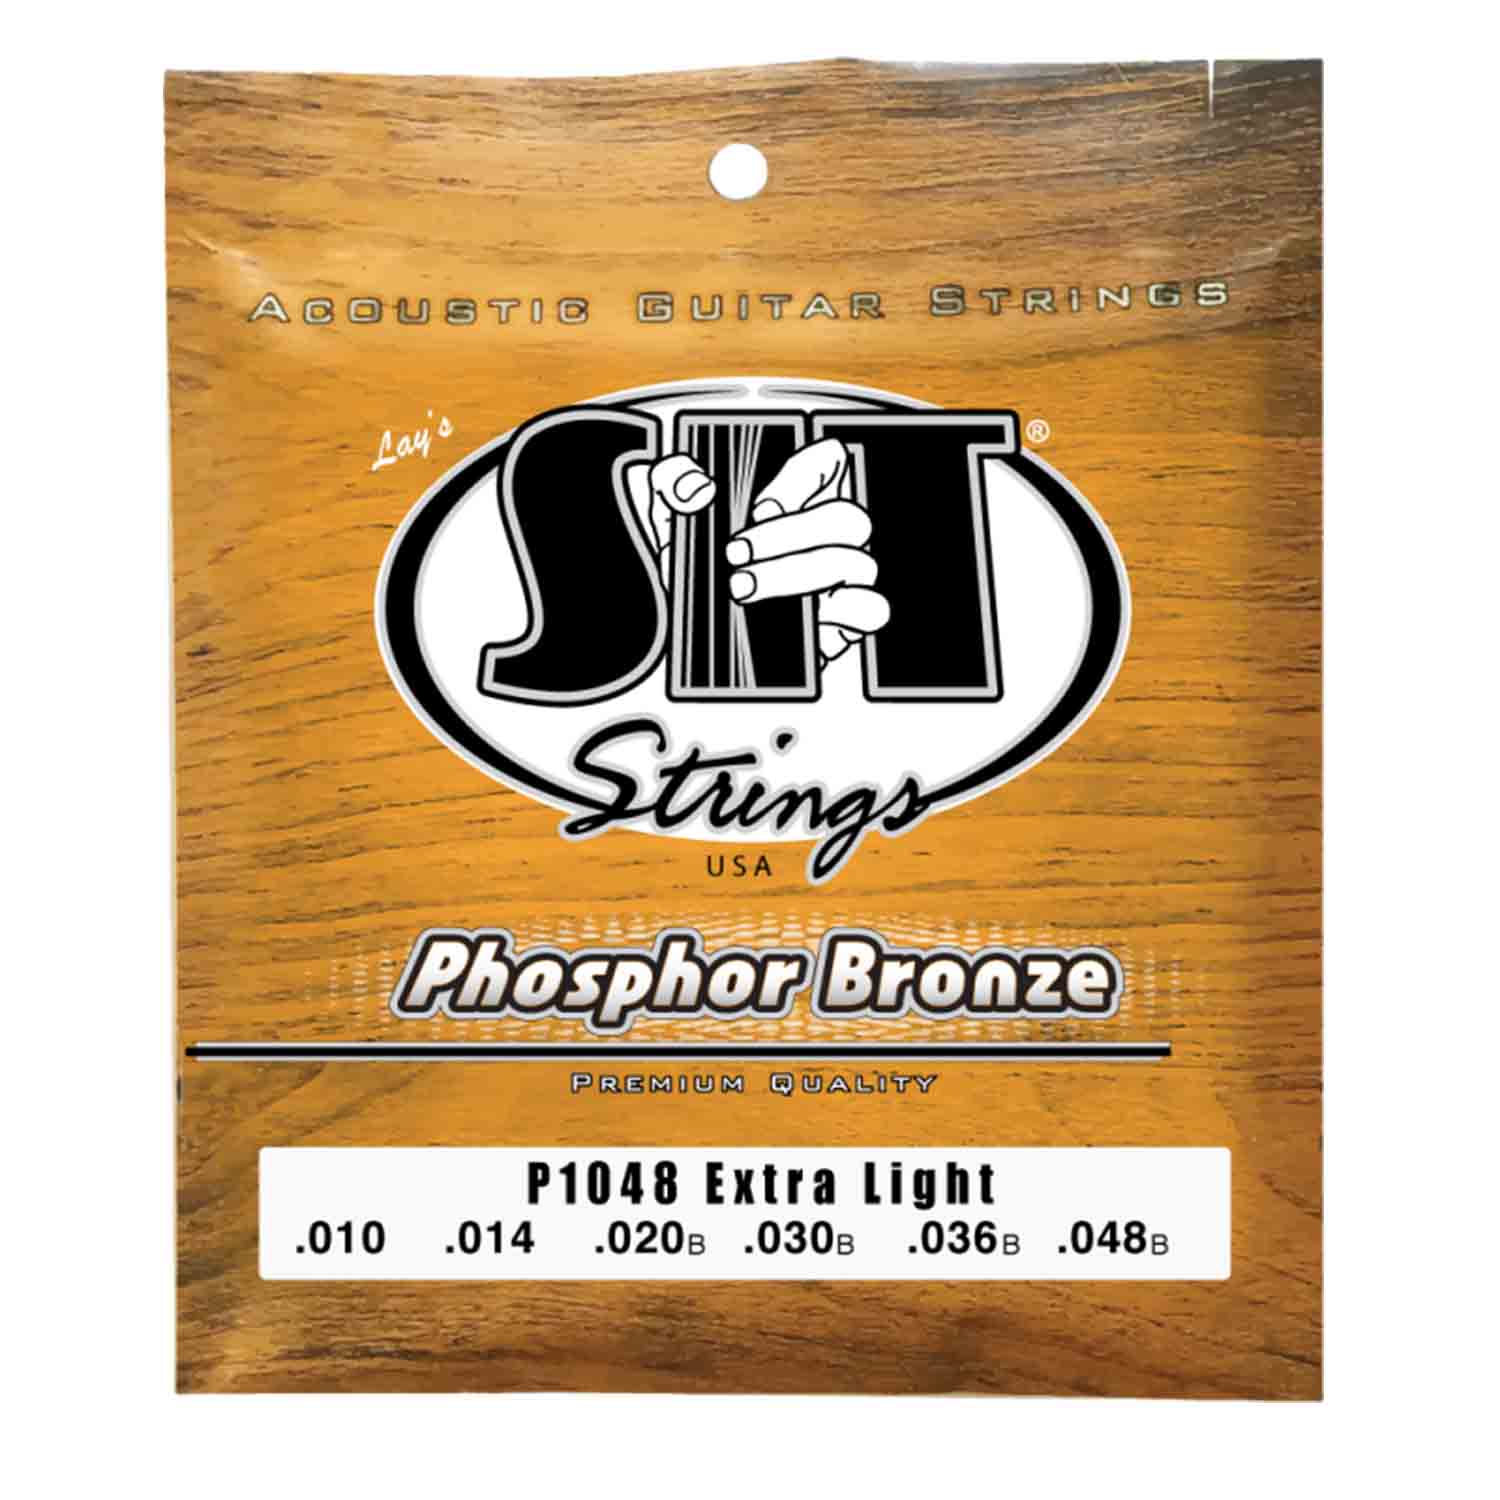 SIT Strings P1048 Extra Light Phosphor Bronze Acoustic Guitar Strings - Hollywood DJ